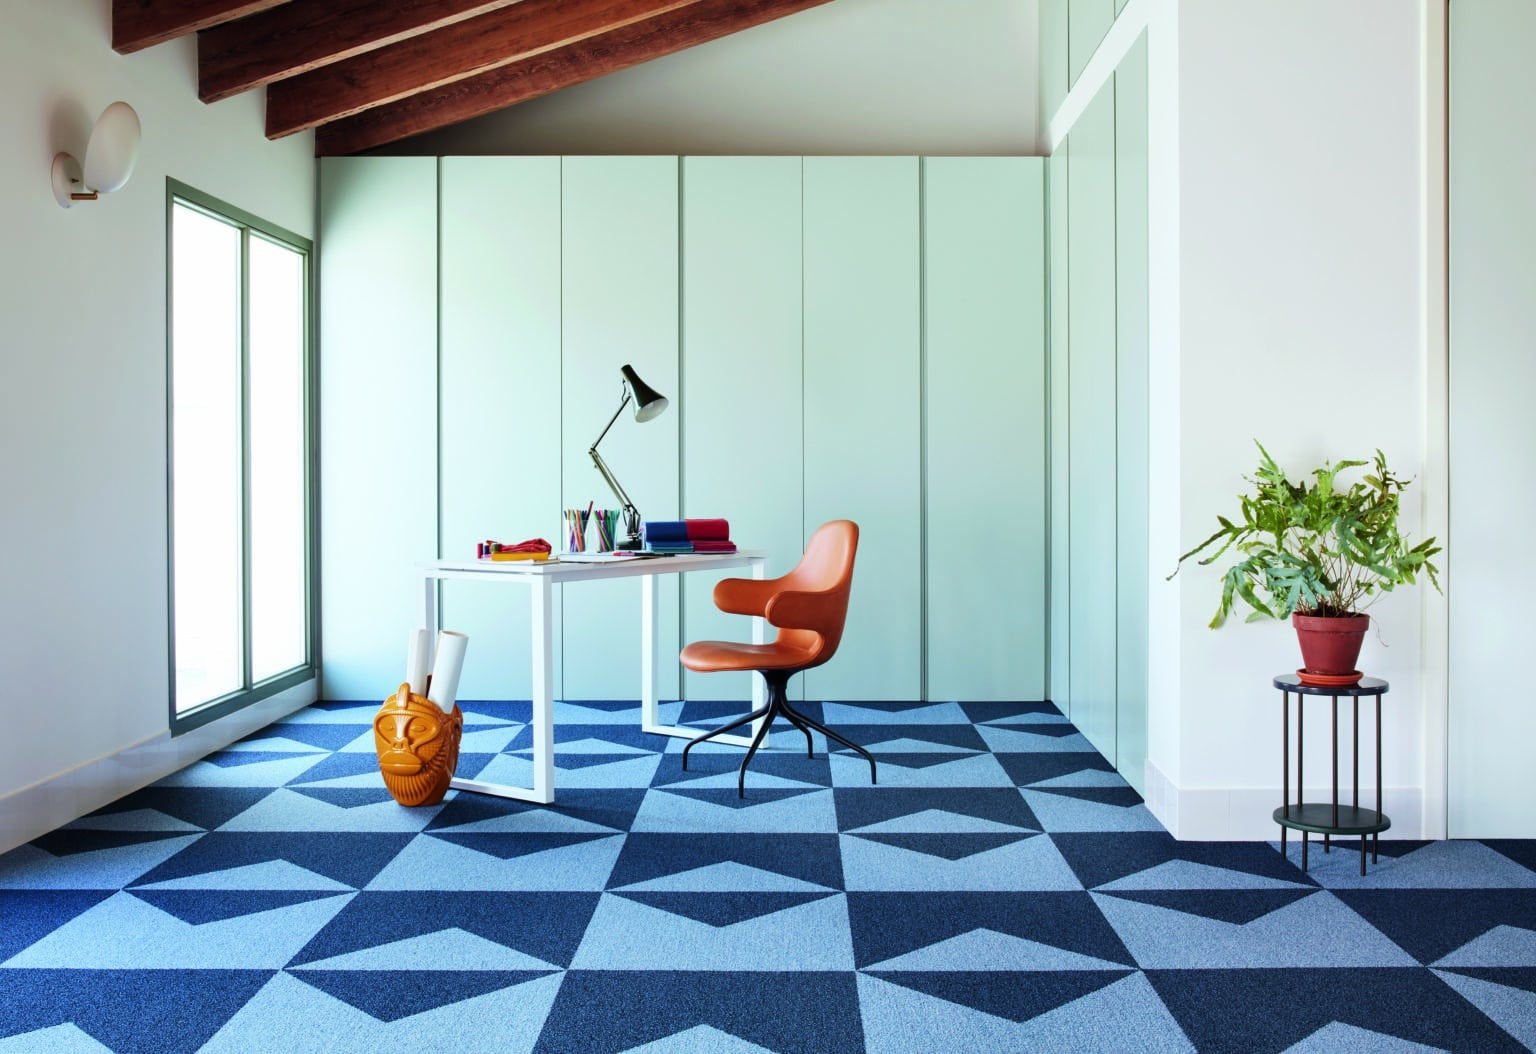 Commercial Modular Carpet Tiles